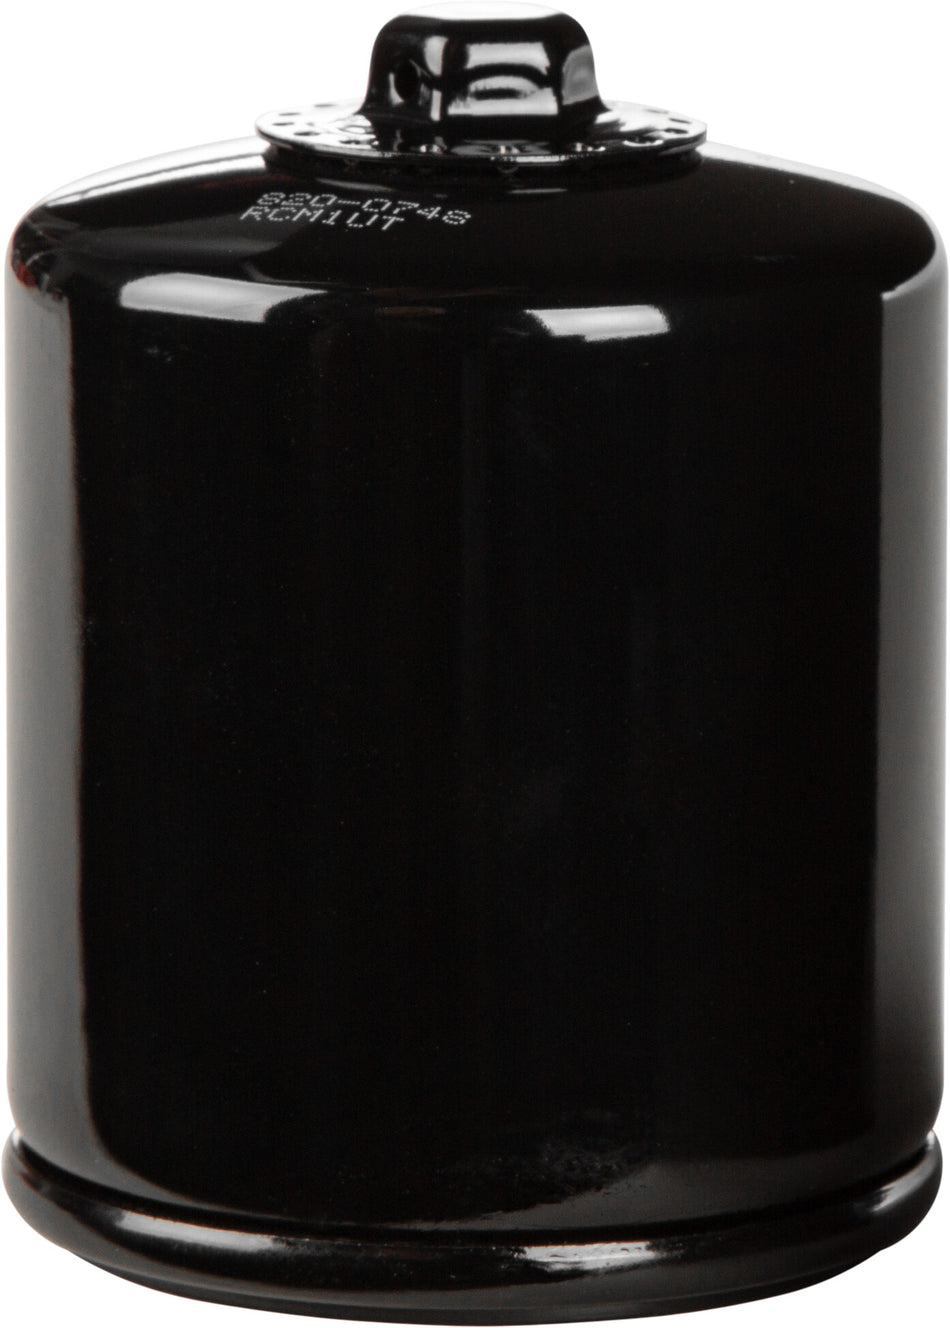 HARDDRIVE Oil Filter Twin Cam Black Heavy Duty W/Hex PS171BNHD